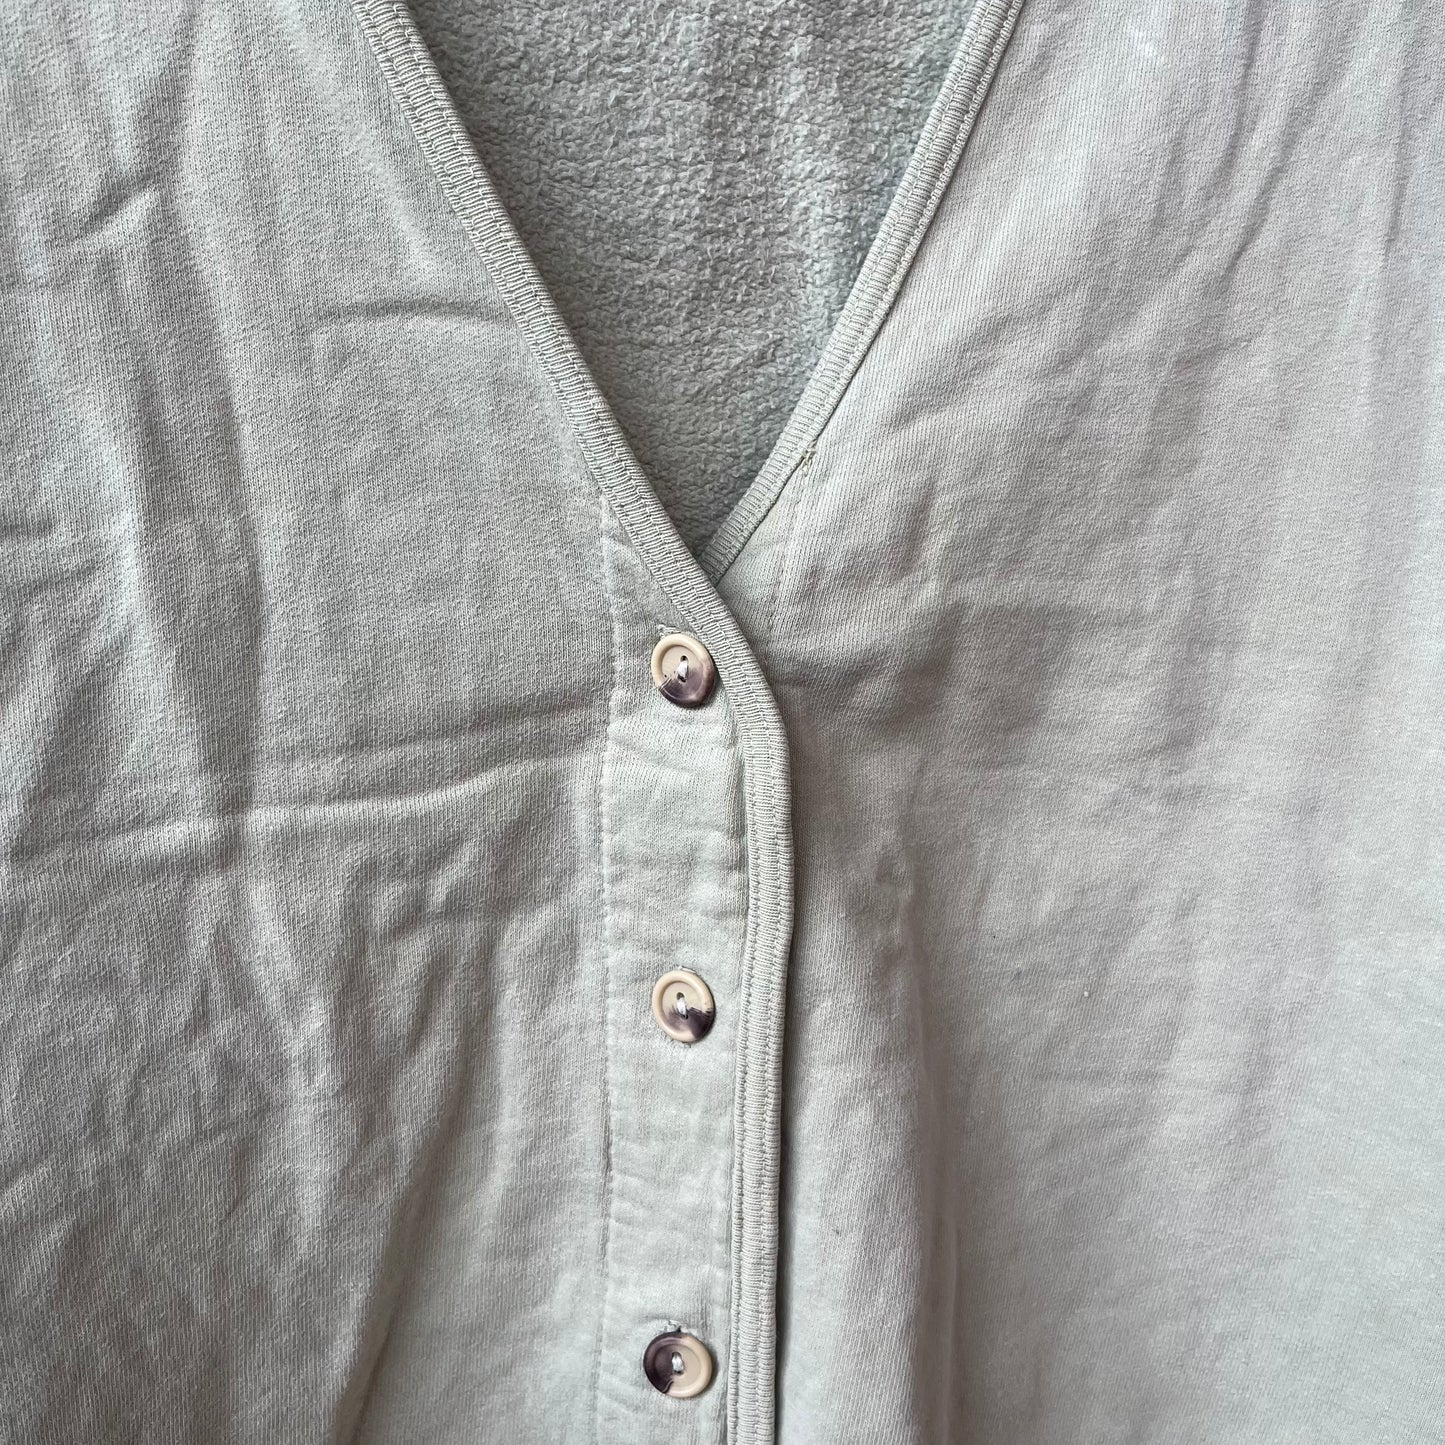 90’s Vintage Sage Green Cotton Slouchy Sweater Vest / Size XL